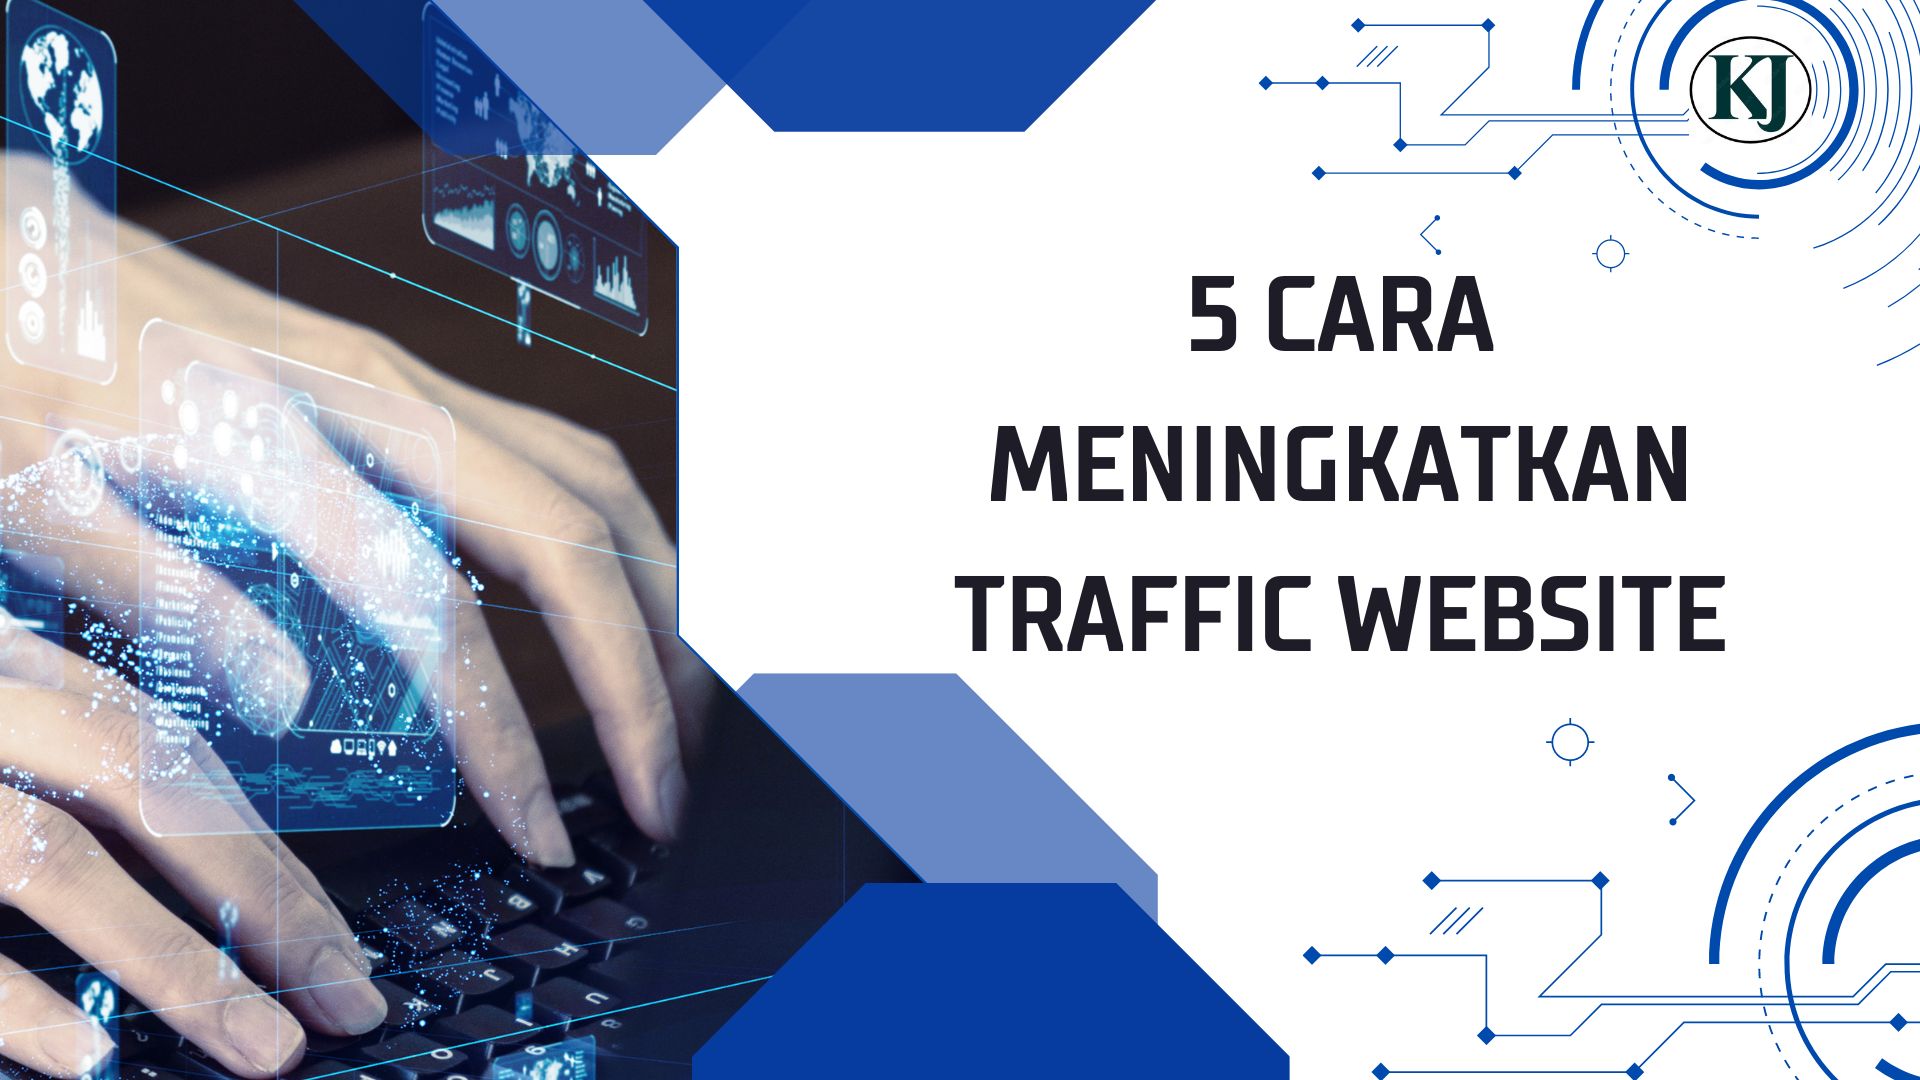 5 Cara Meningkatkan Traffic Website